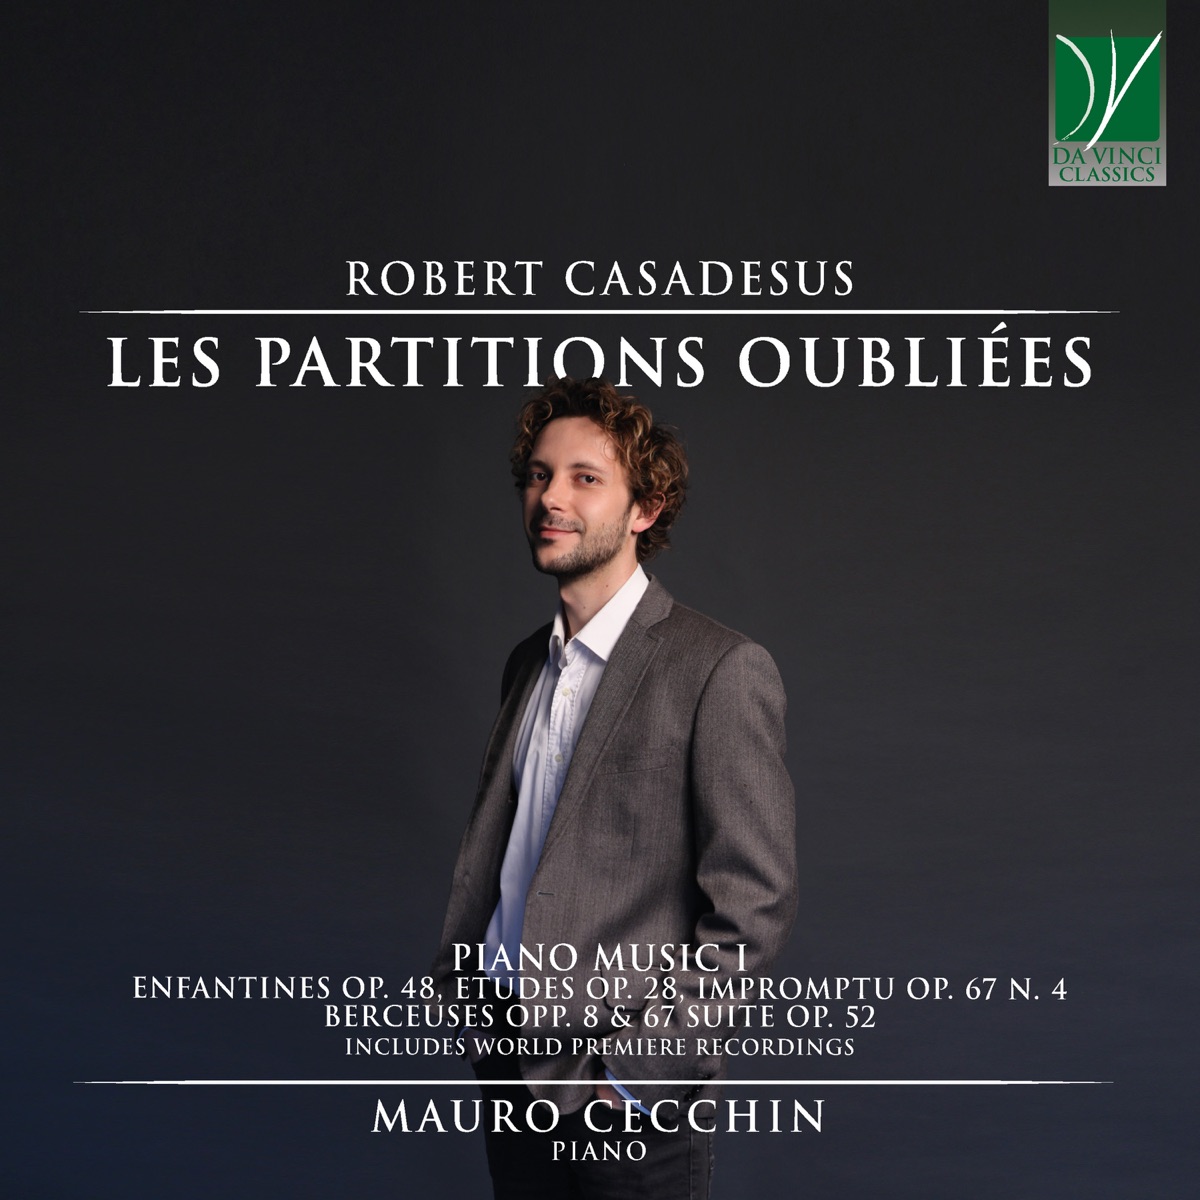 Robert Casadesus: Les partitions oubliées, Piano Music I (Enfantines Op.  48, Etudes Op. 28, Impromptu Op. 67 No.4, Berceuses Opp. 8 & 67, Suite Op.  52) by Mauro Cecchin on Apple Music